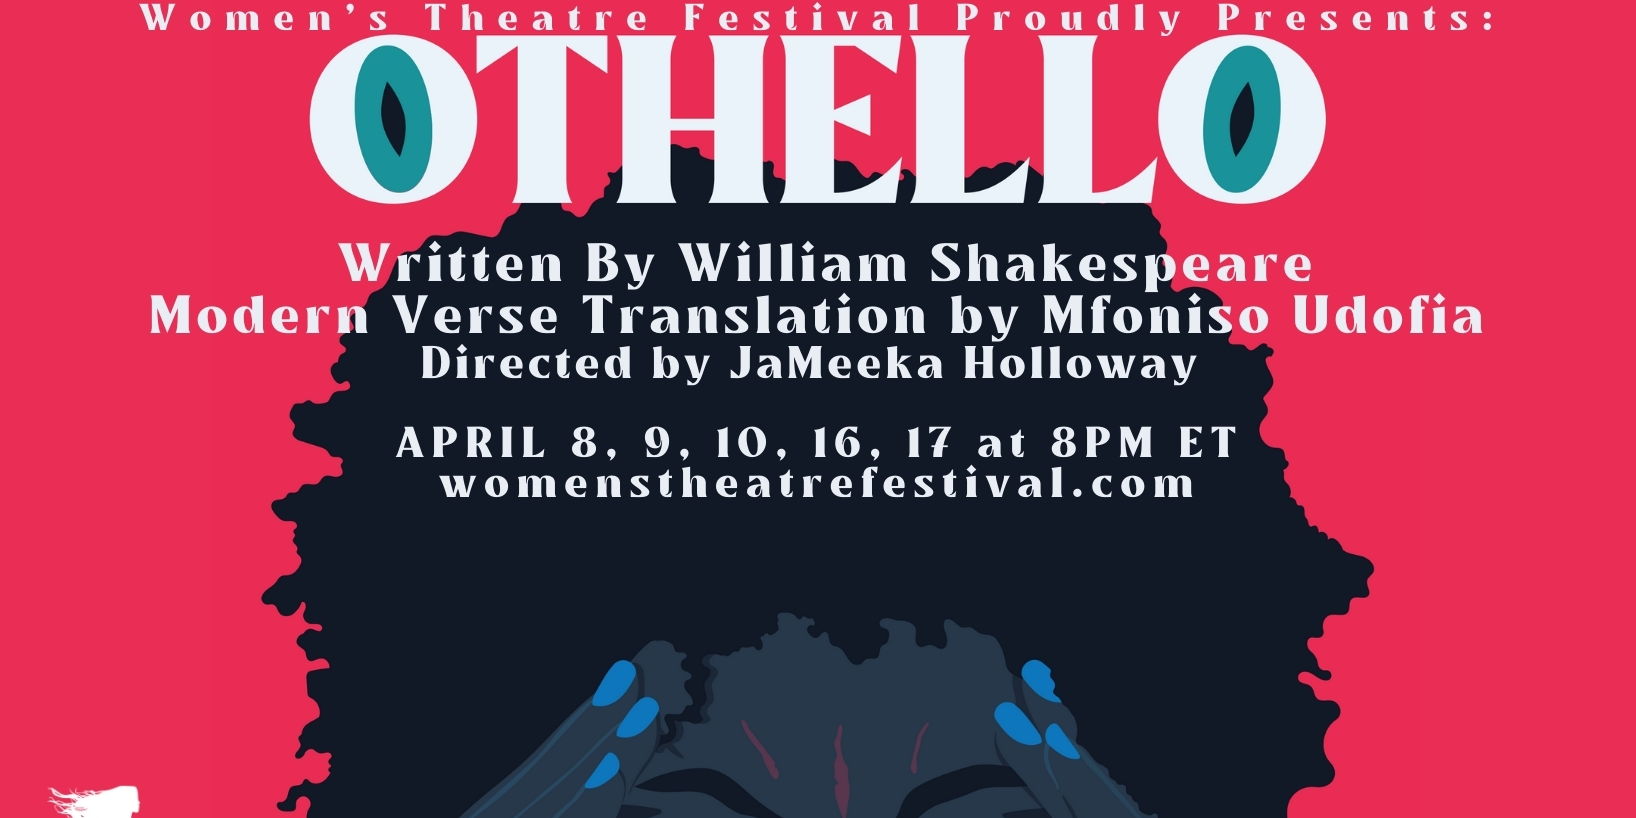 Women's Theatre Festival Presents "OTHELLO" promotional image